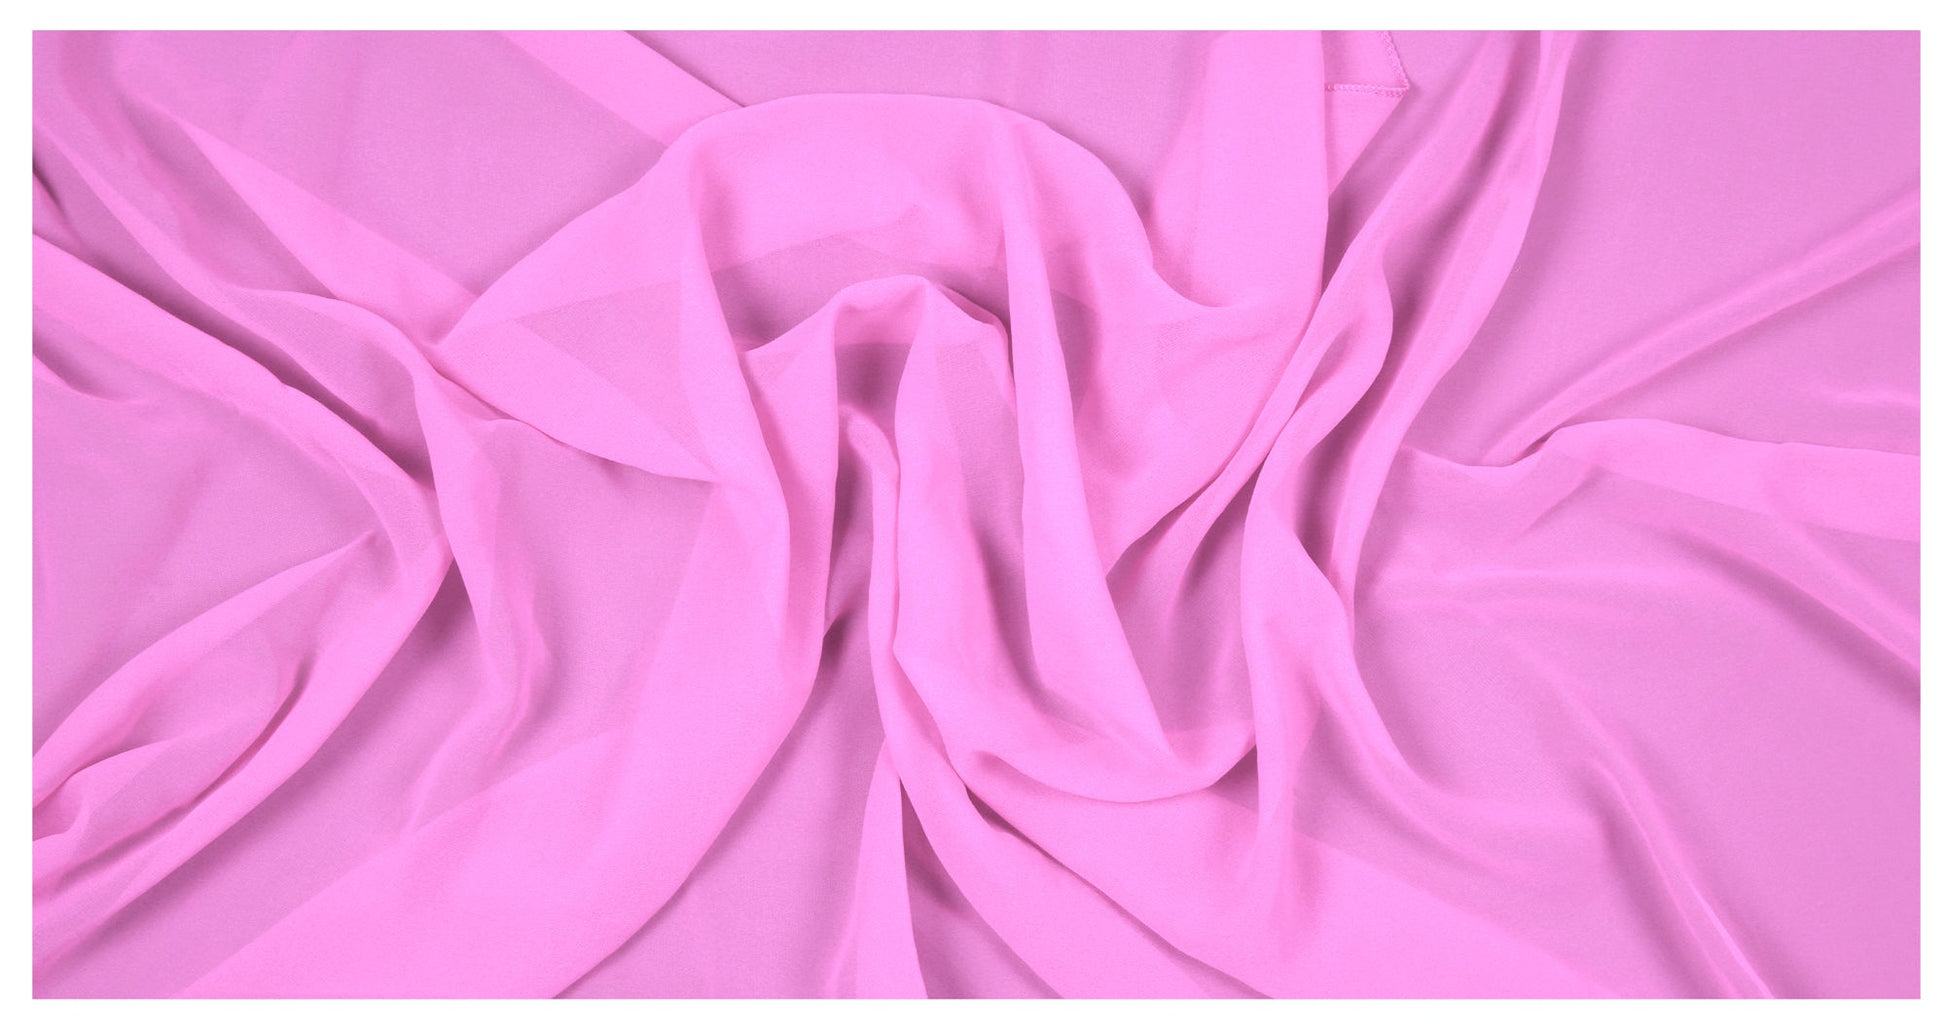 Bubblegum Pink,aac15056-cc40-4232-95c7-a4d4641f87e6